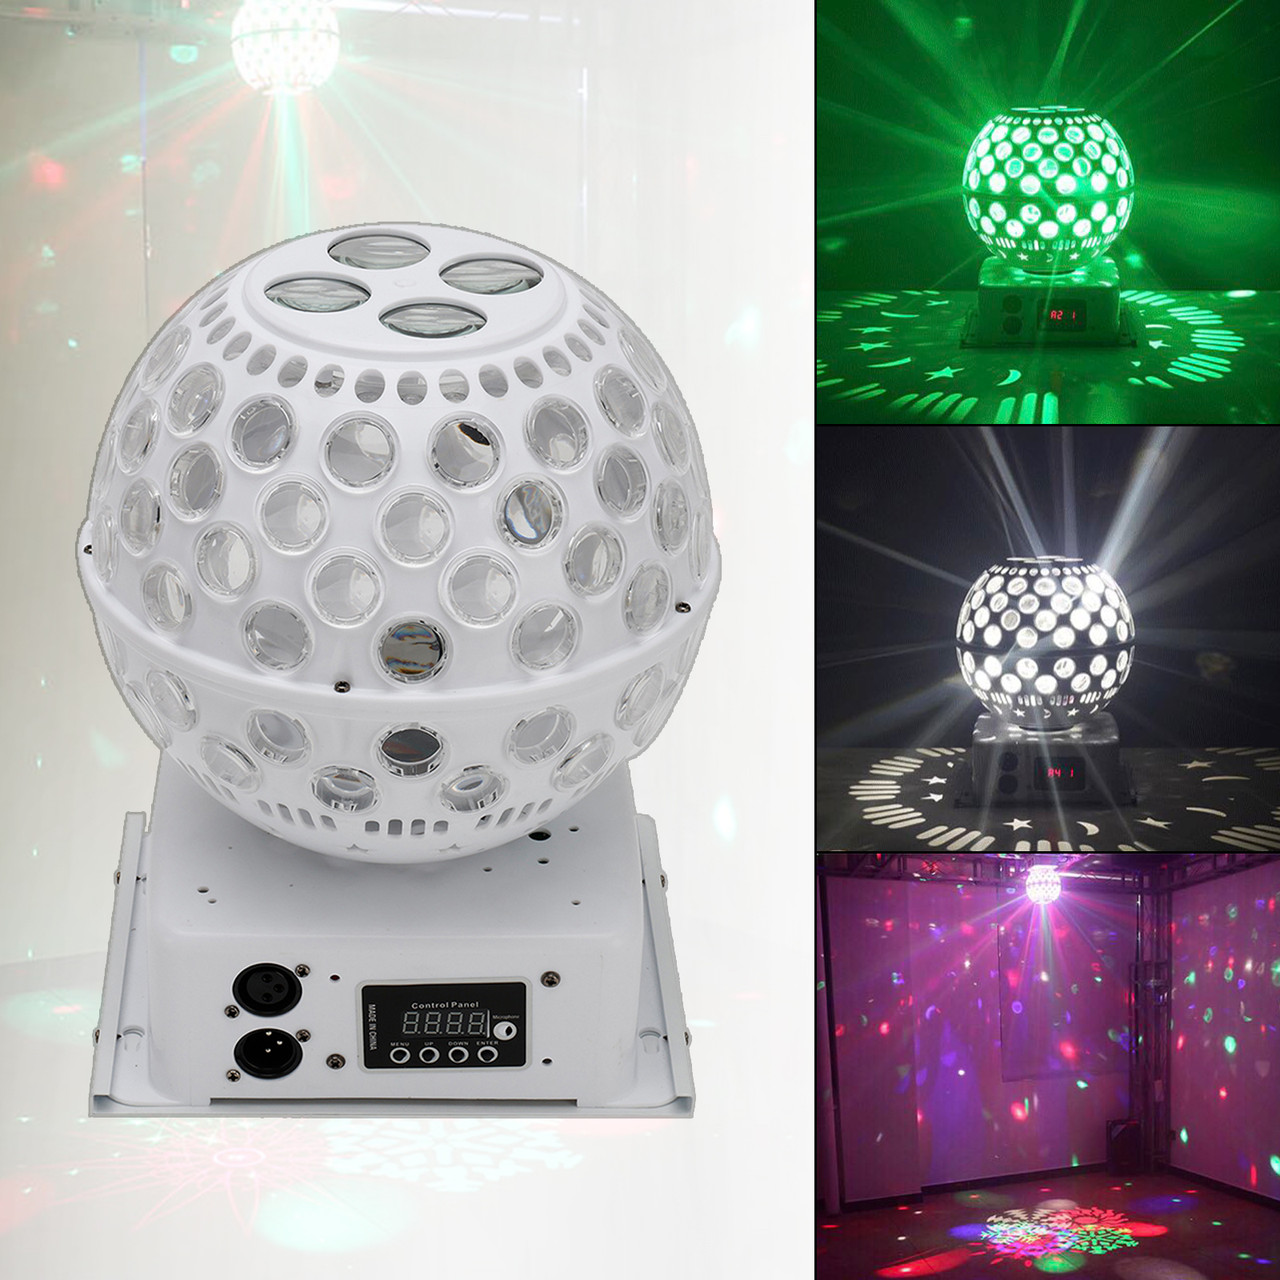 AU Plug Lantern Pattern 12 LED Stage Light DJ KTV Projector Disco Party Magic Ball